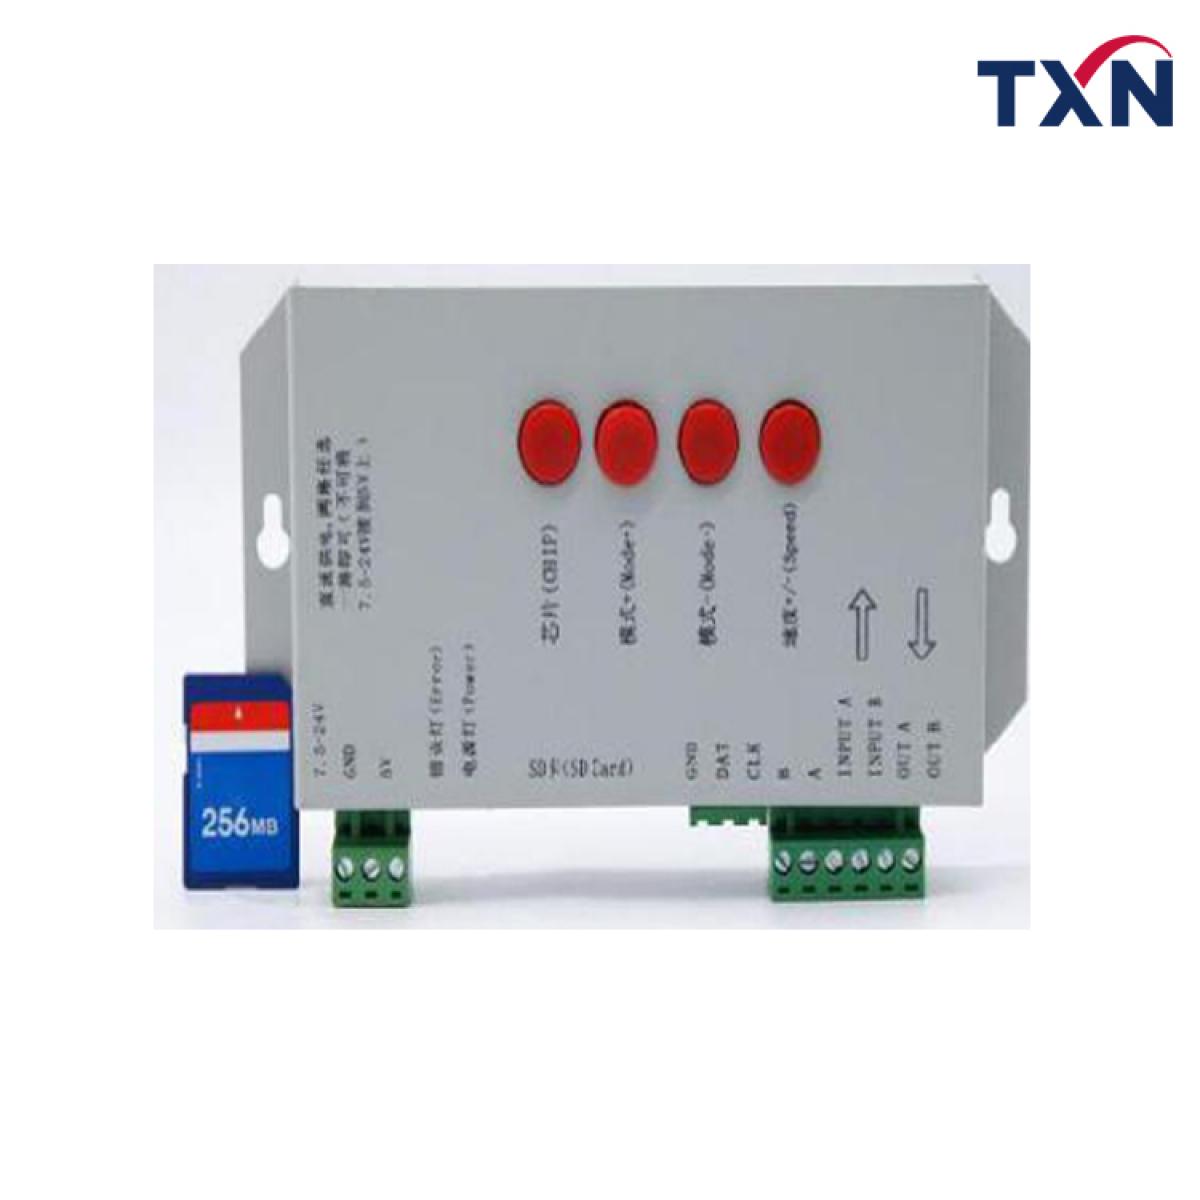 T1000S SD Card SPI Controller for Digital RGB LED Strips, 5V-24V Input